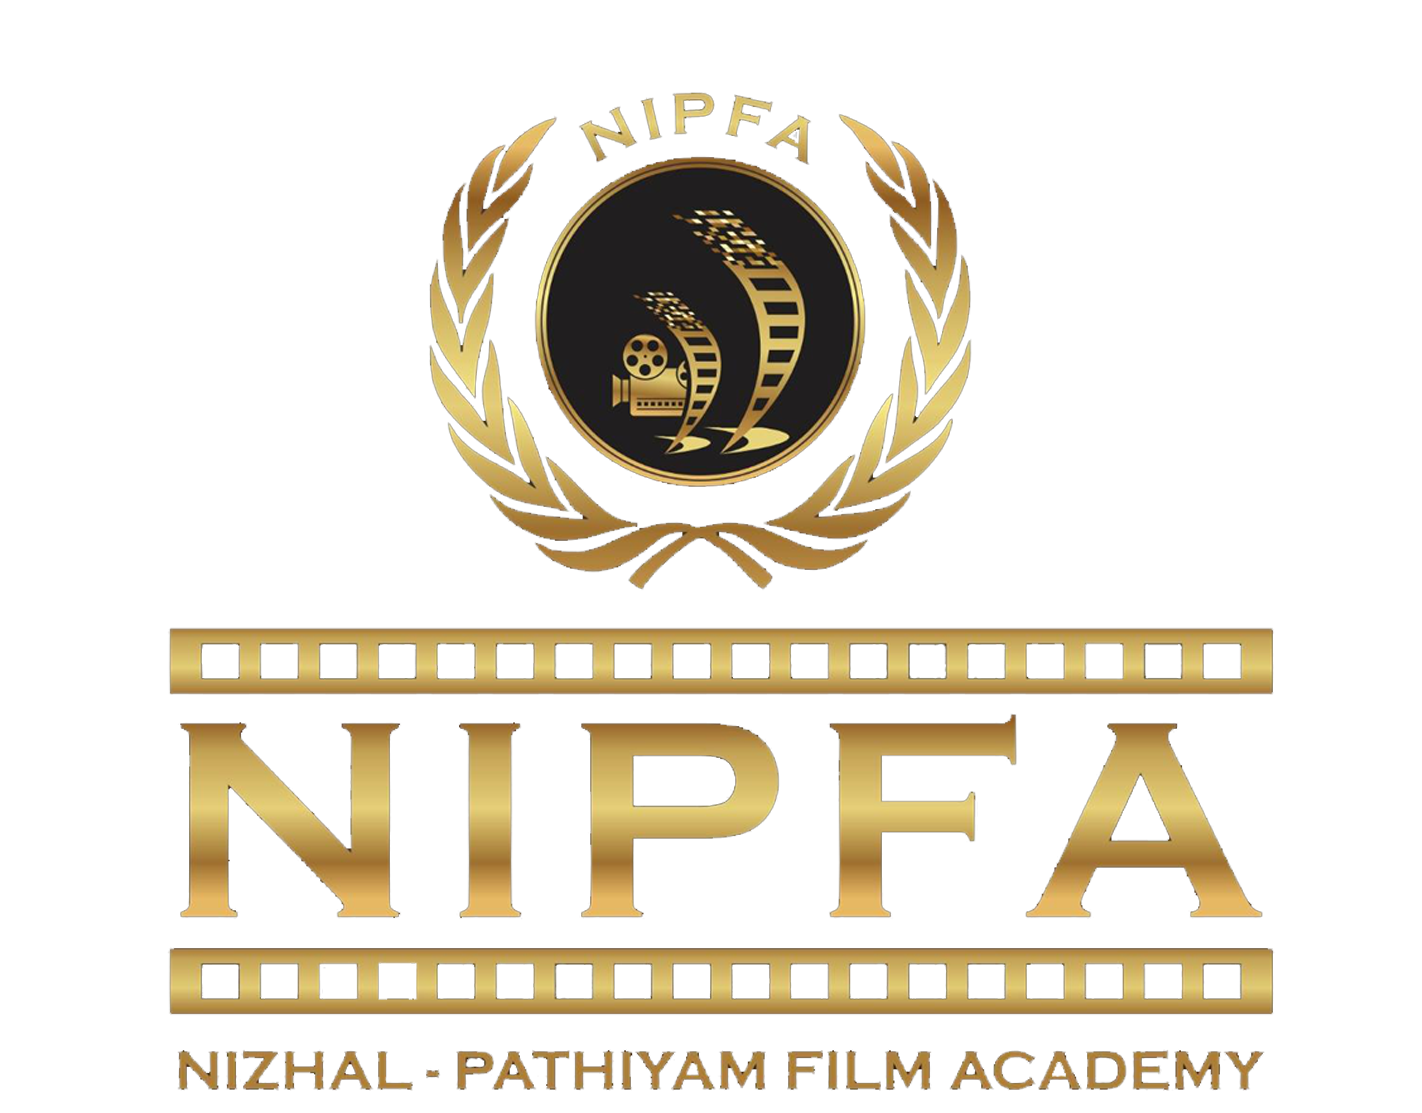 NIZHAL - PATHIYAM FILM ACADEMY (NIPFA)